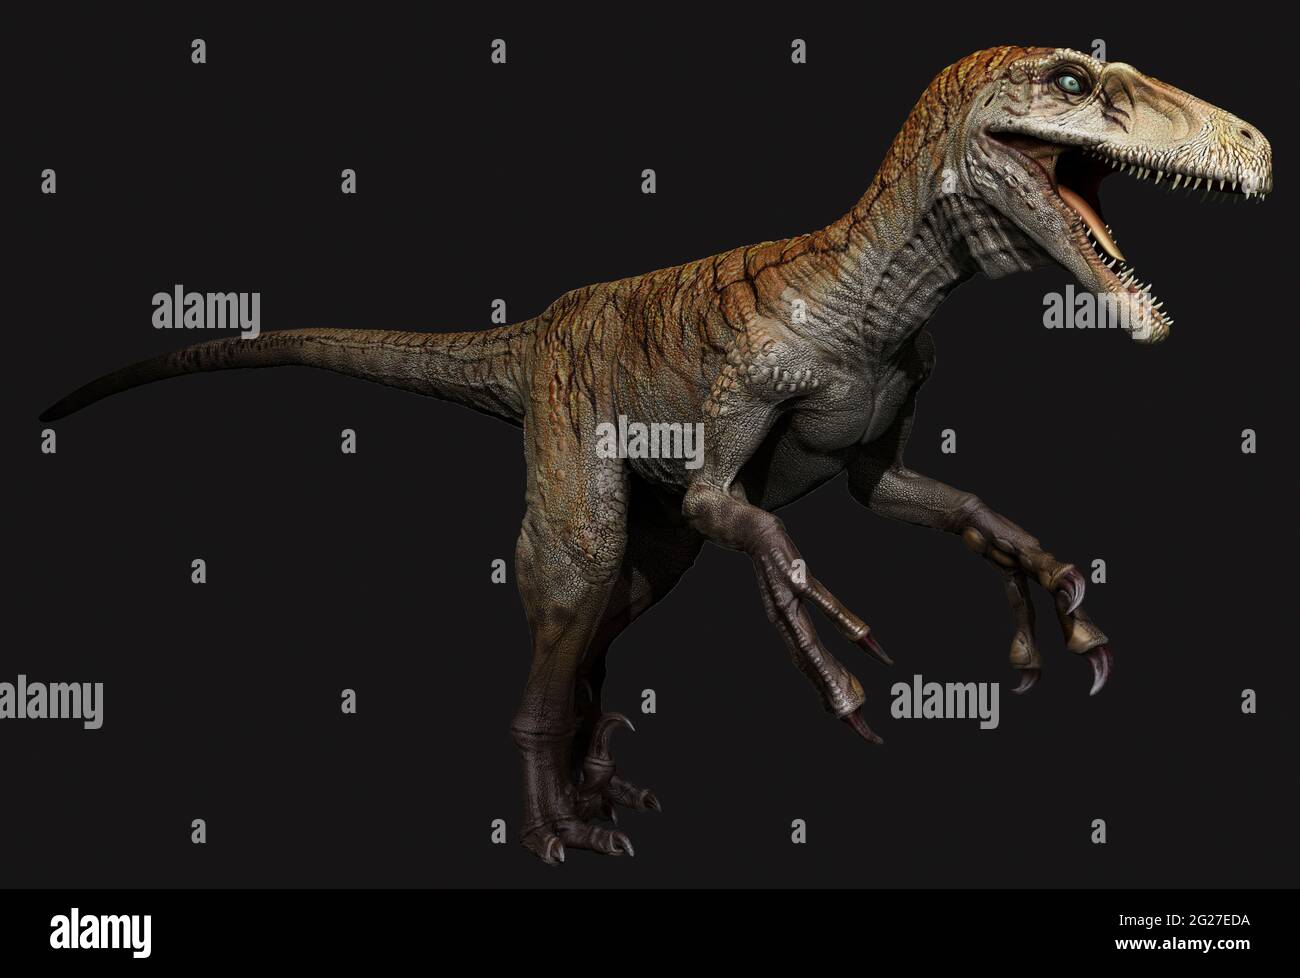 Utahraptor dinosaur, side view on black background. Stock Photo